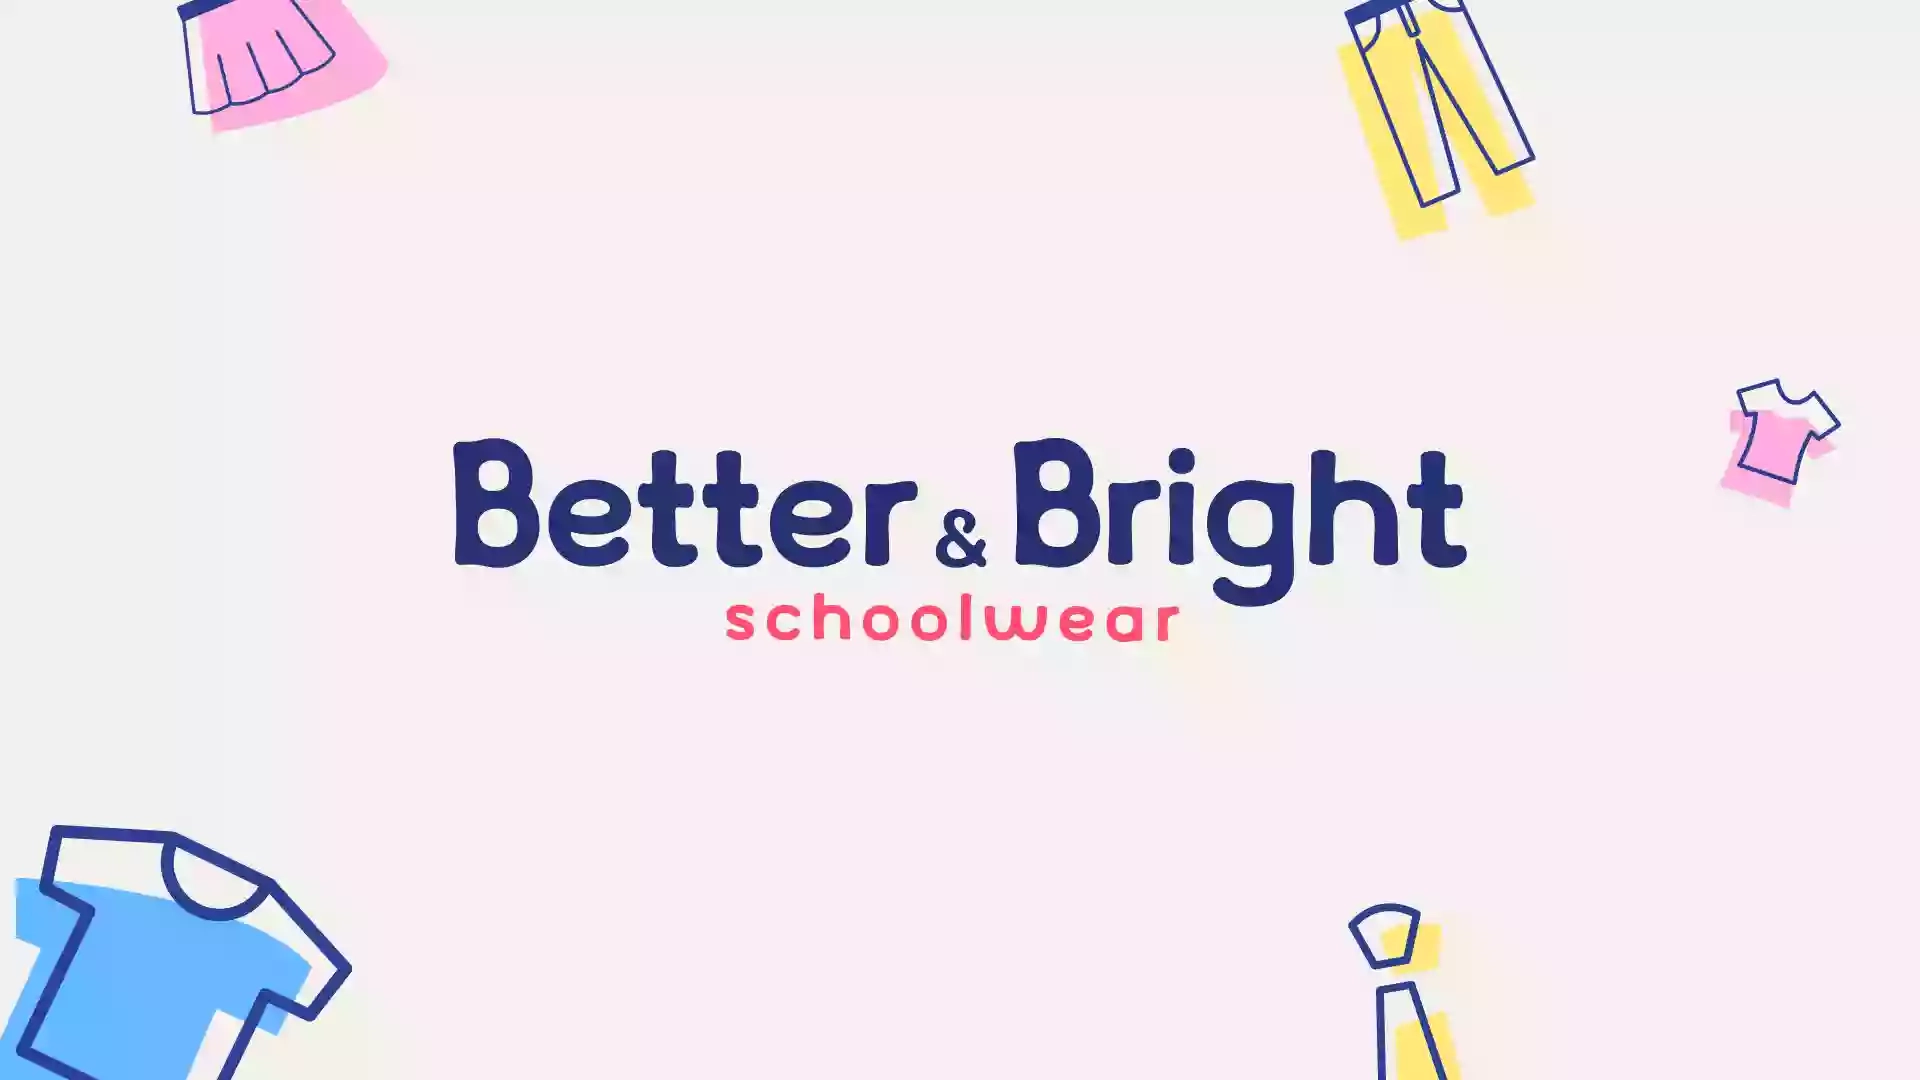 Better & Bright school uniform